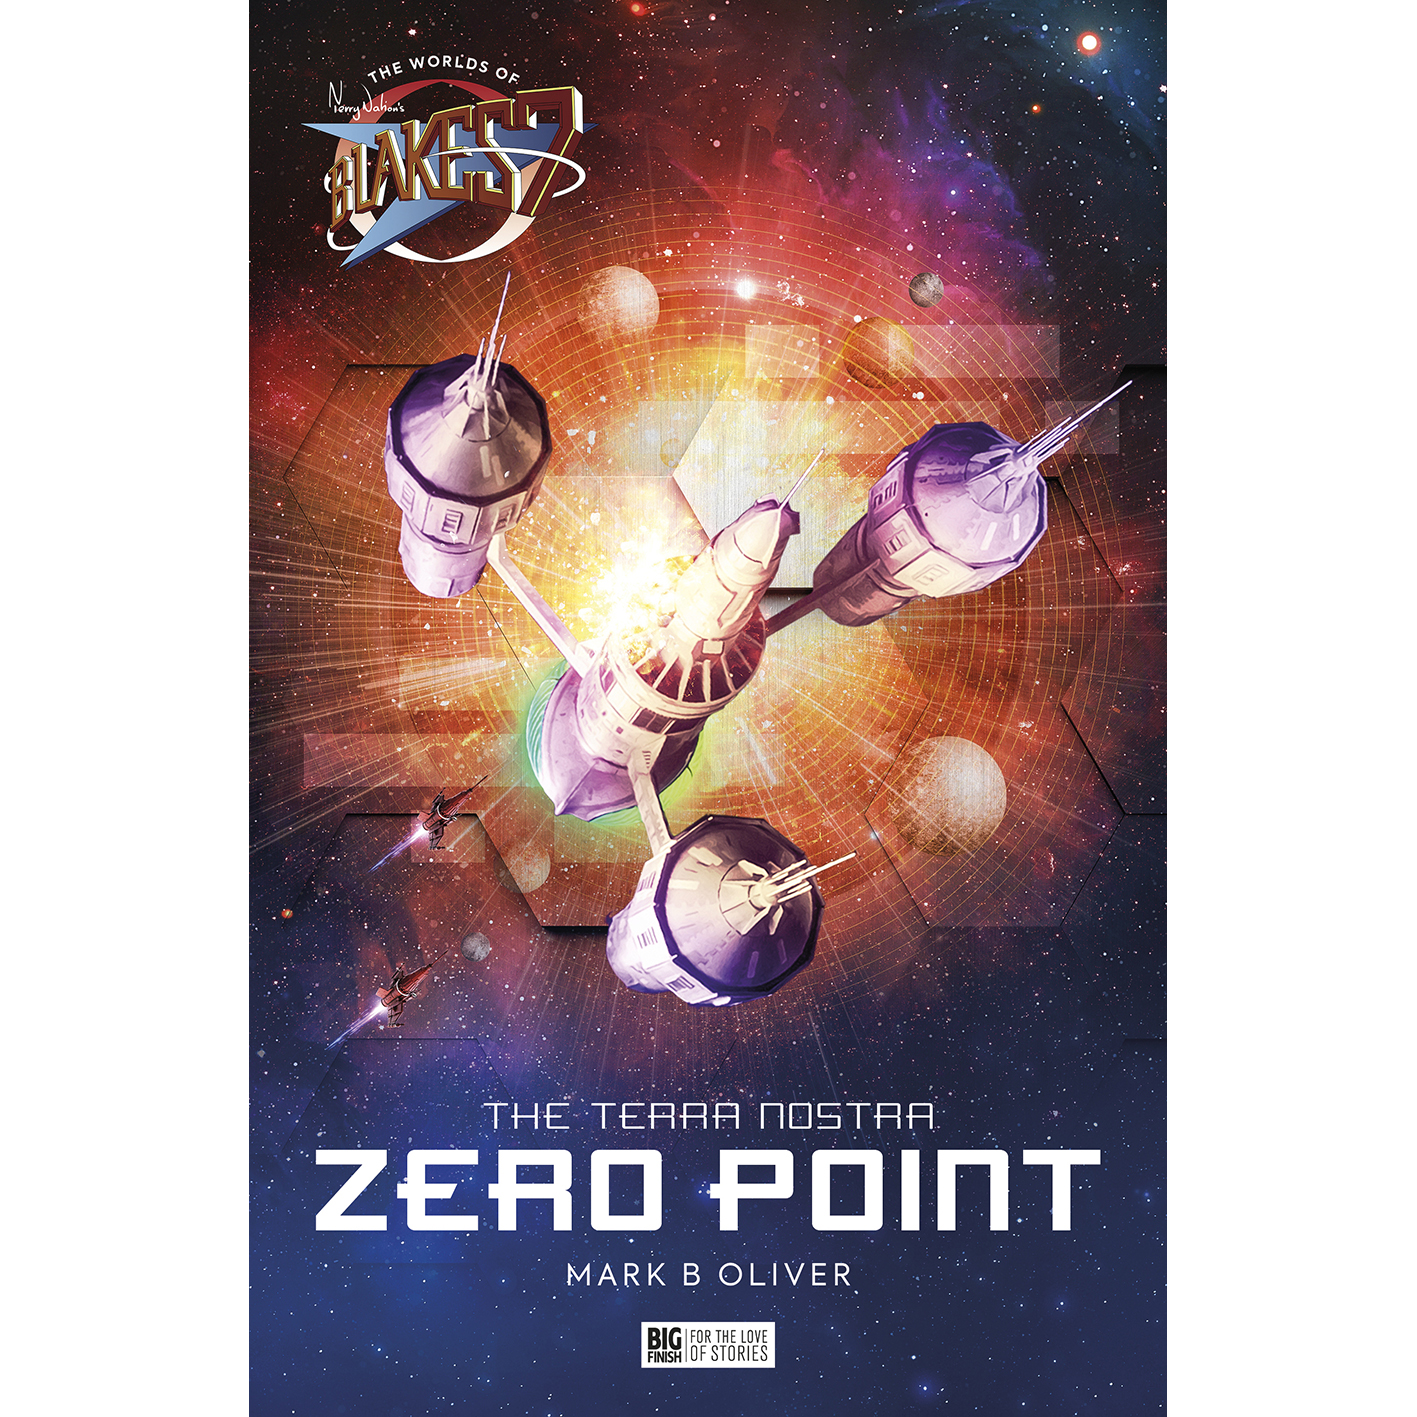 Blake's 7 - Zero Point book cover